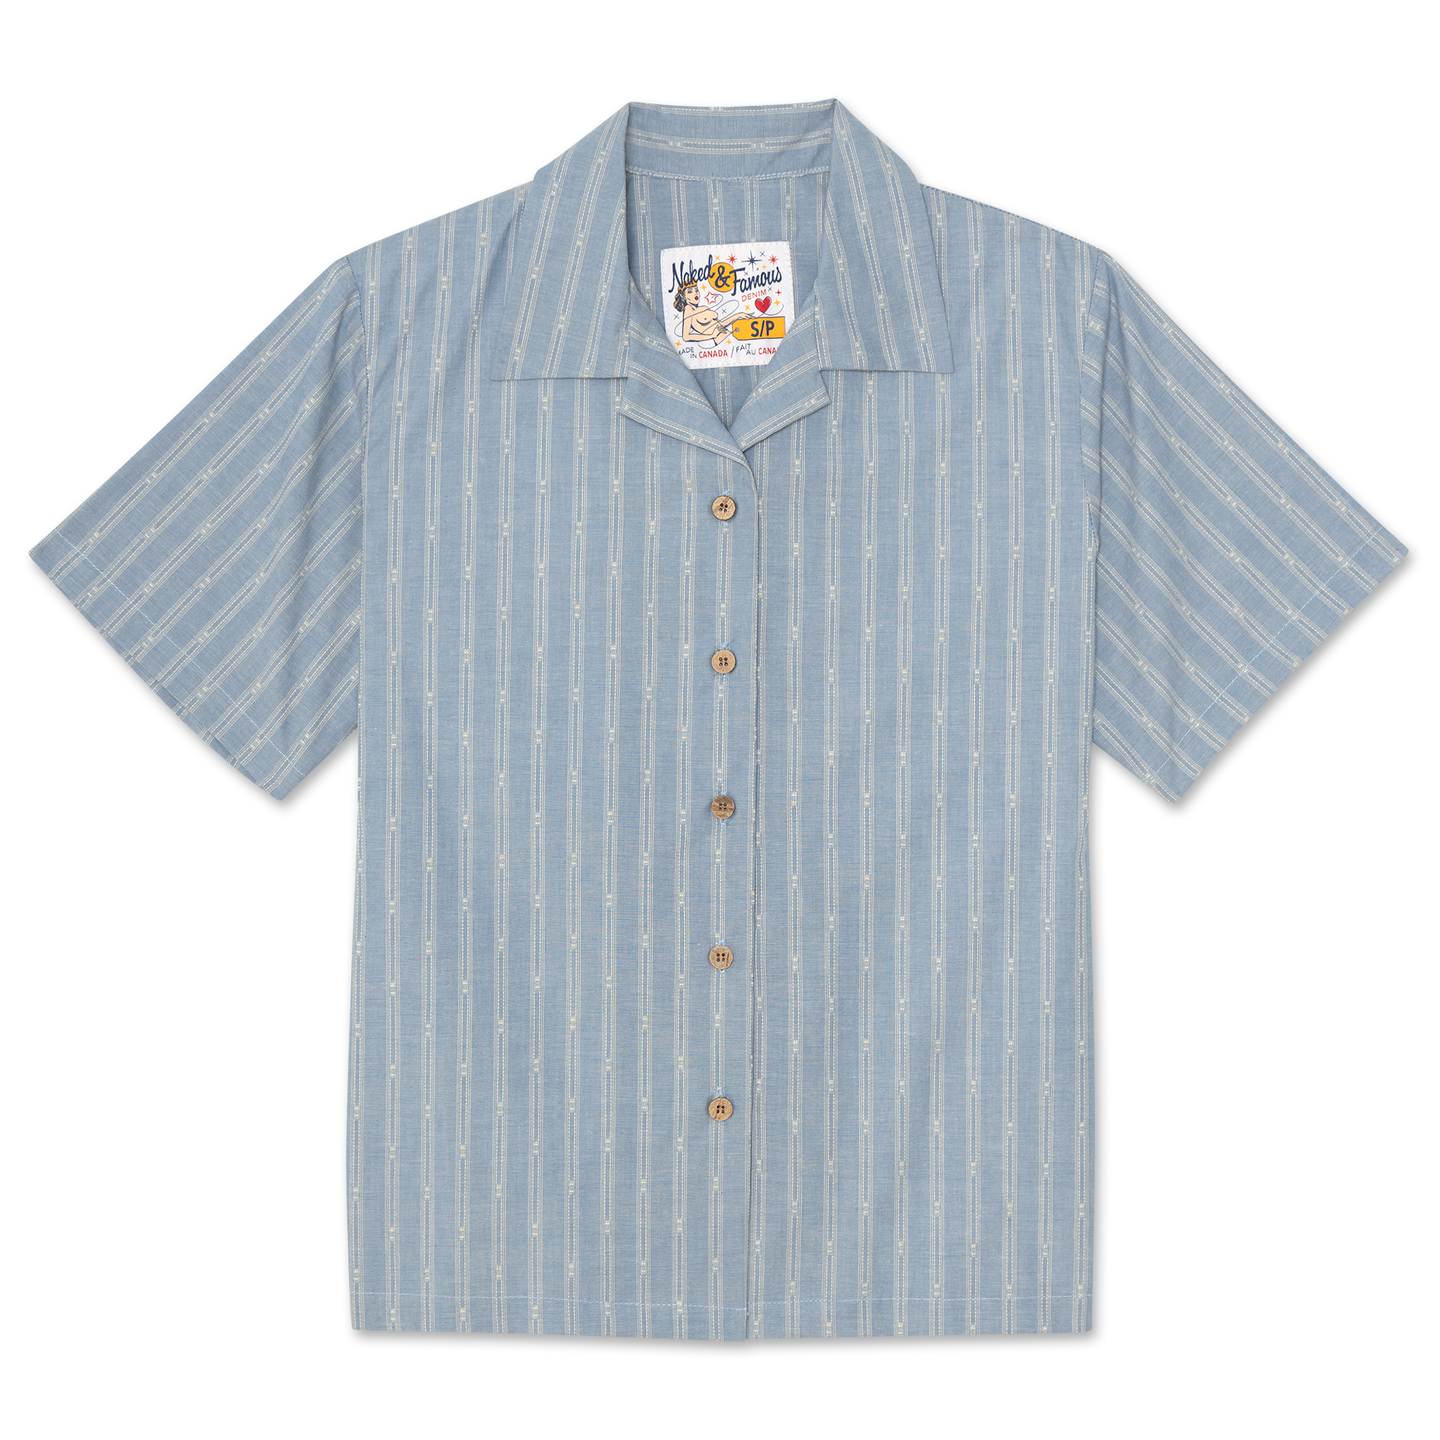 Camp Collar Shirt - Vintage Dobby Stripes - Pale Blue